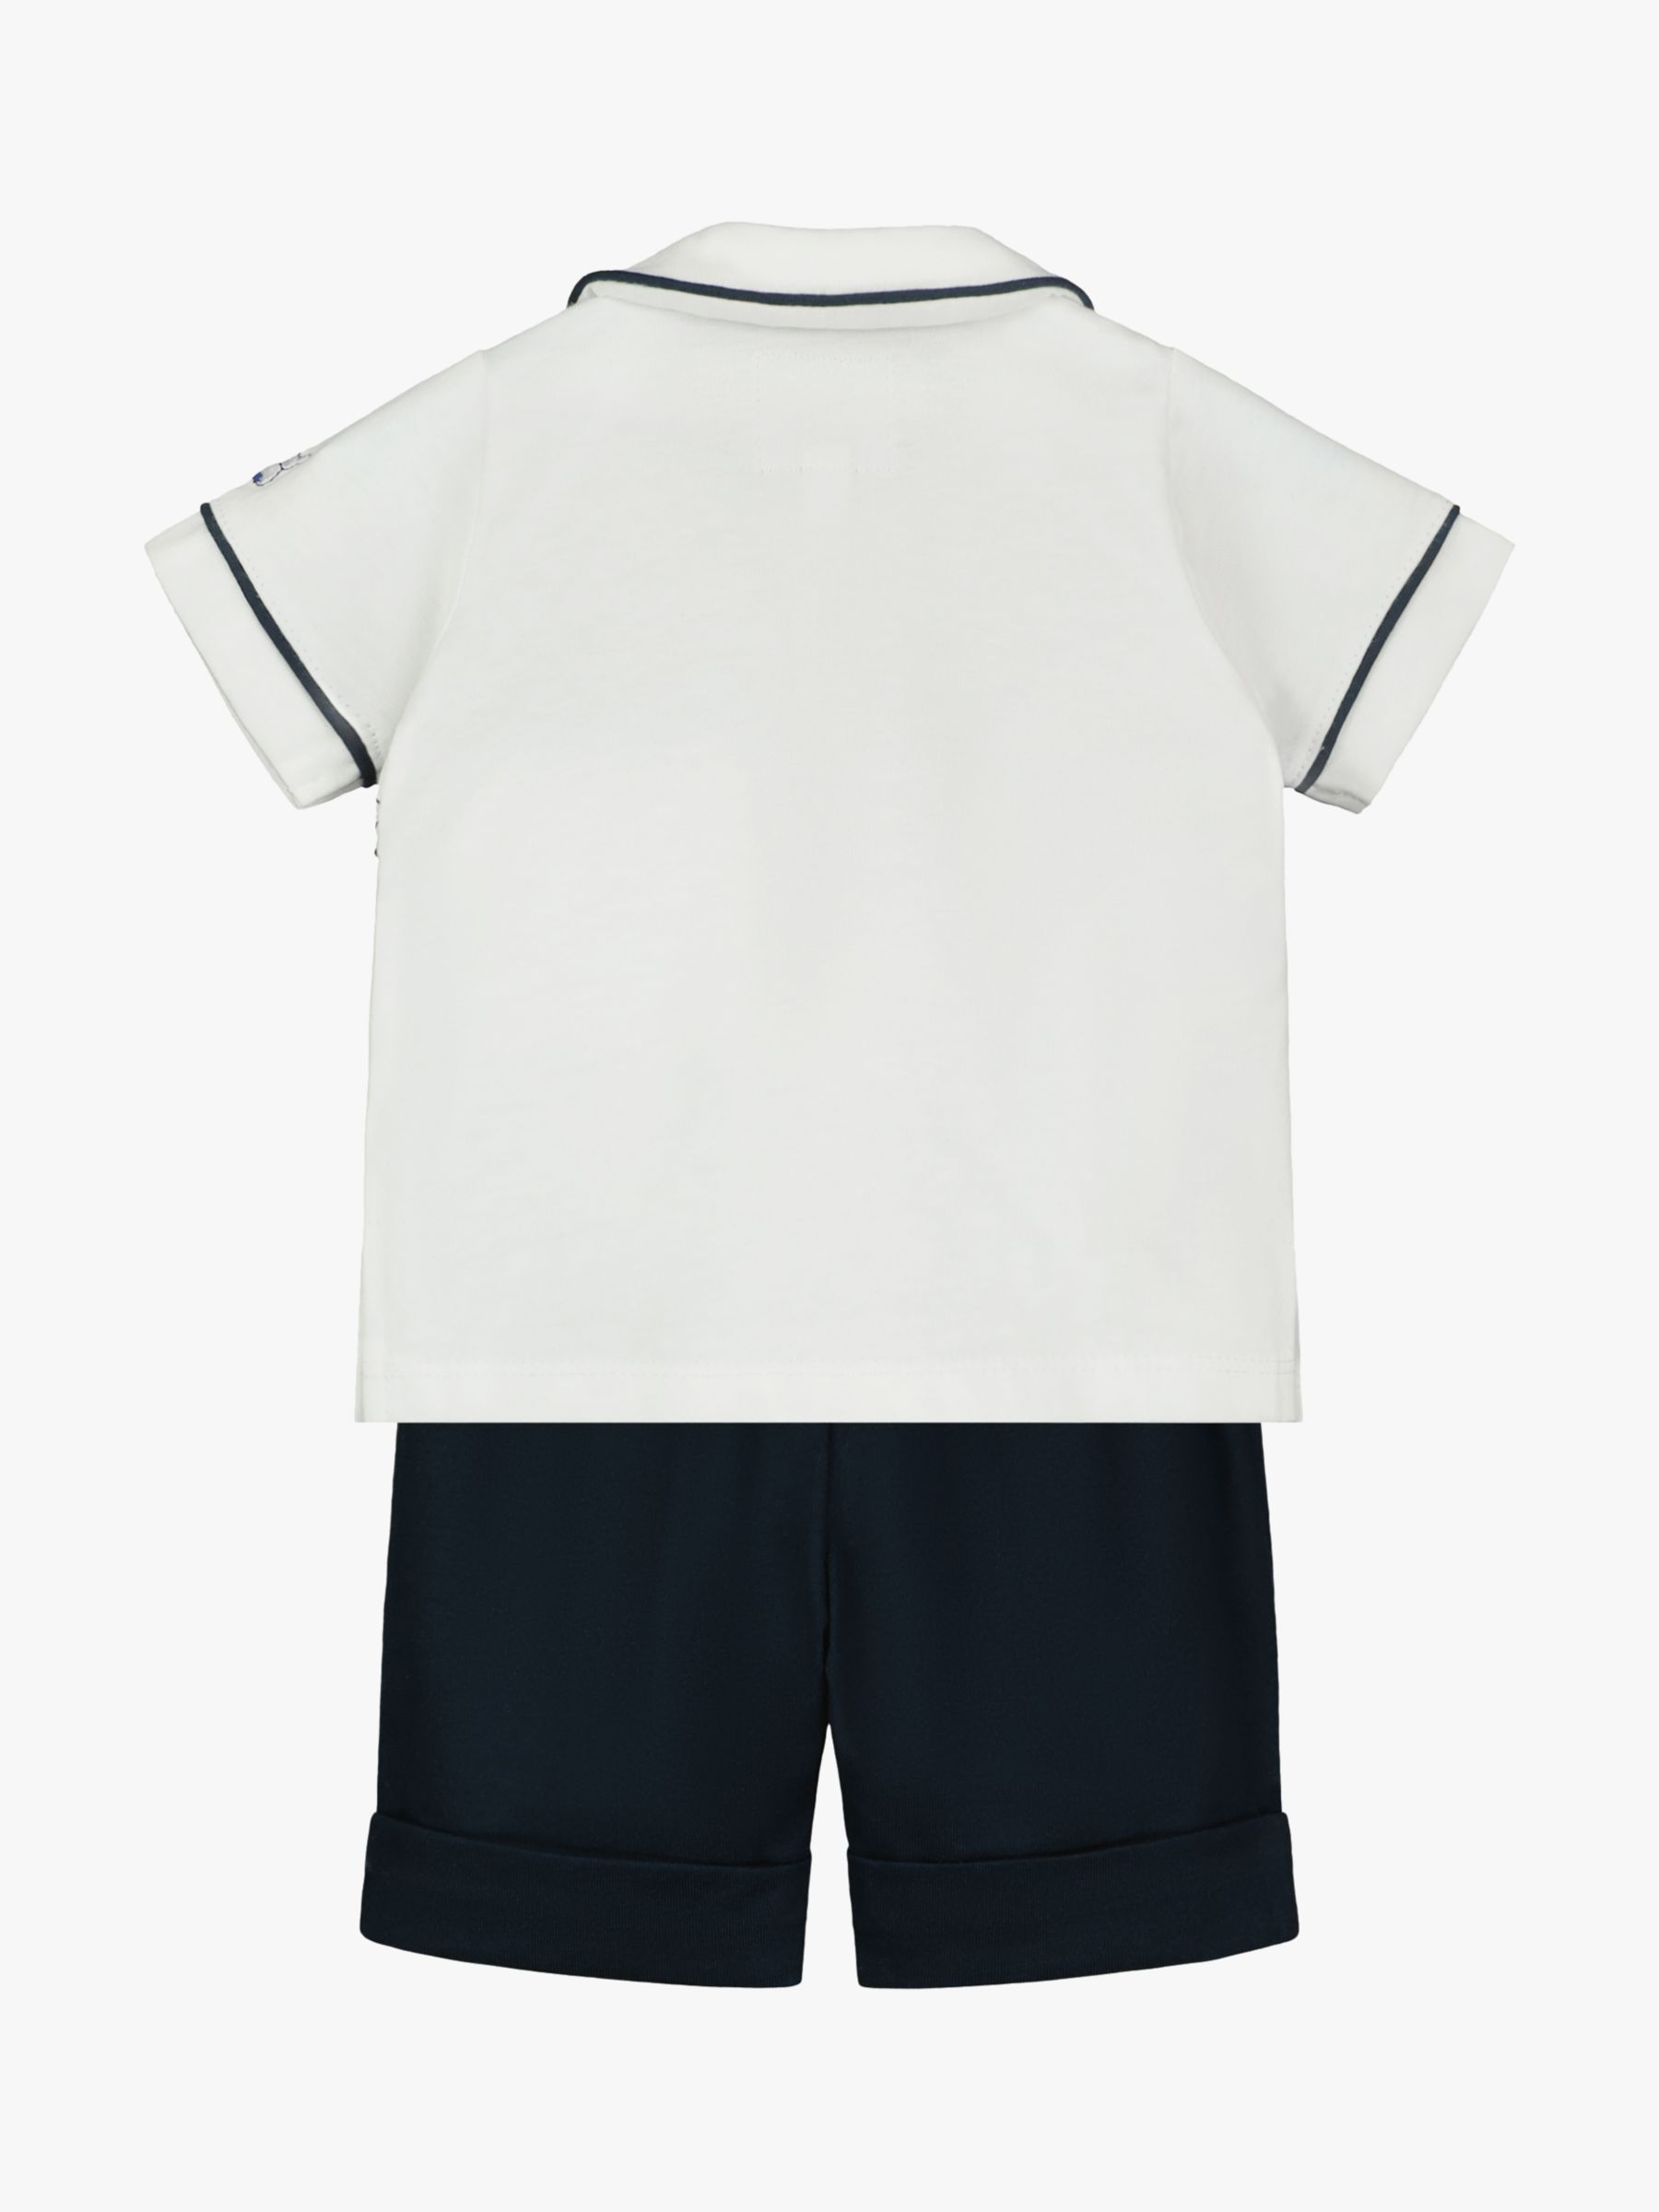 Emile et Rose Baby Frank Top & Shorts Set, Navy/White, 9 months